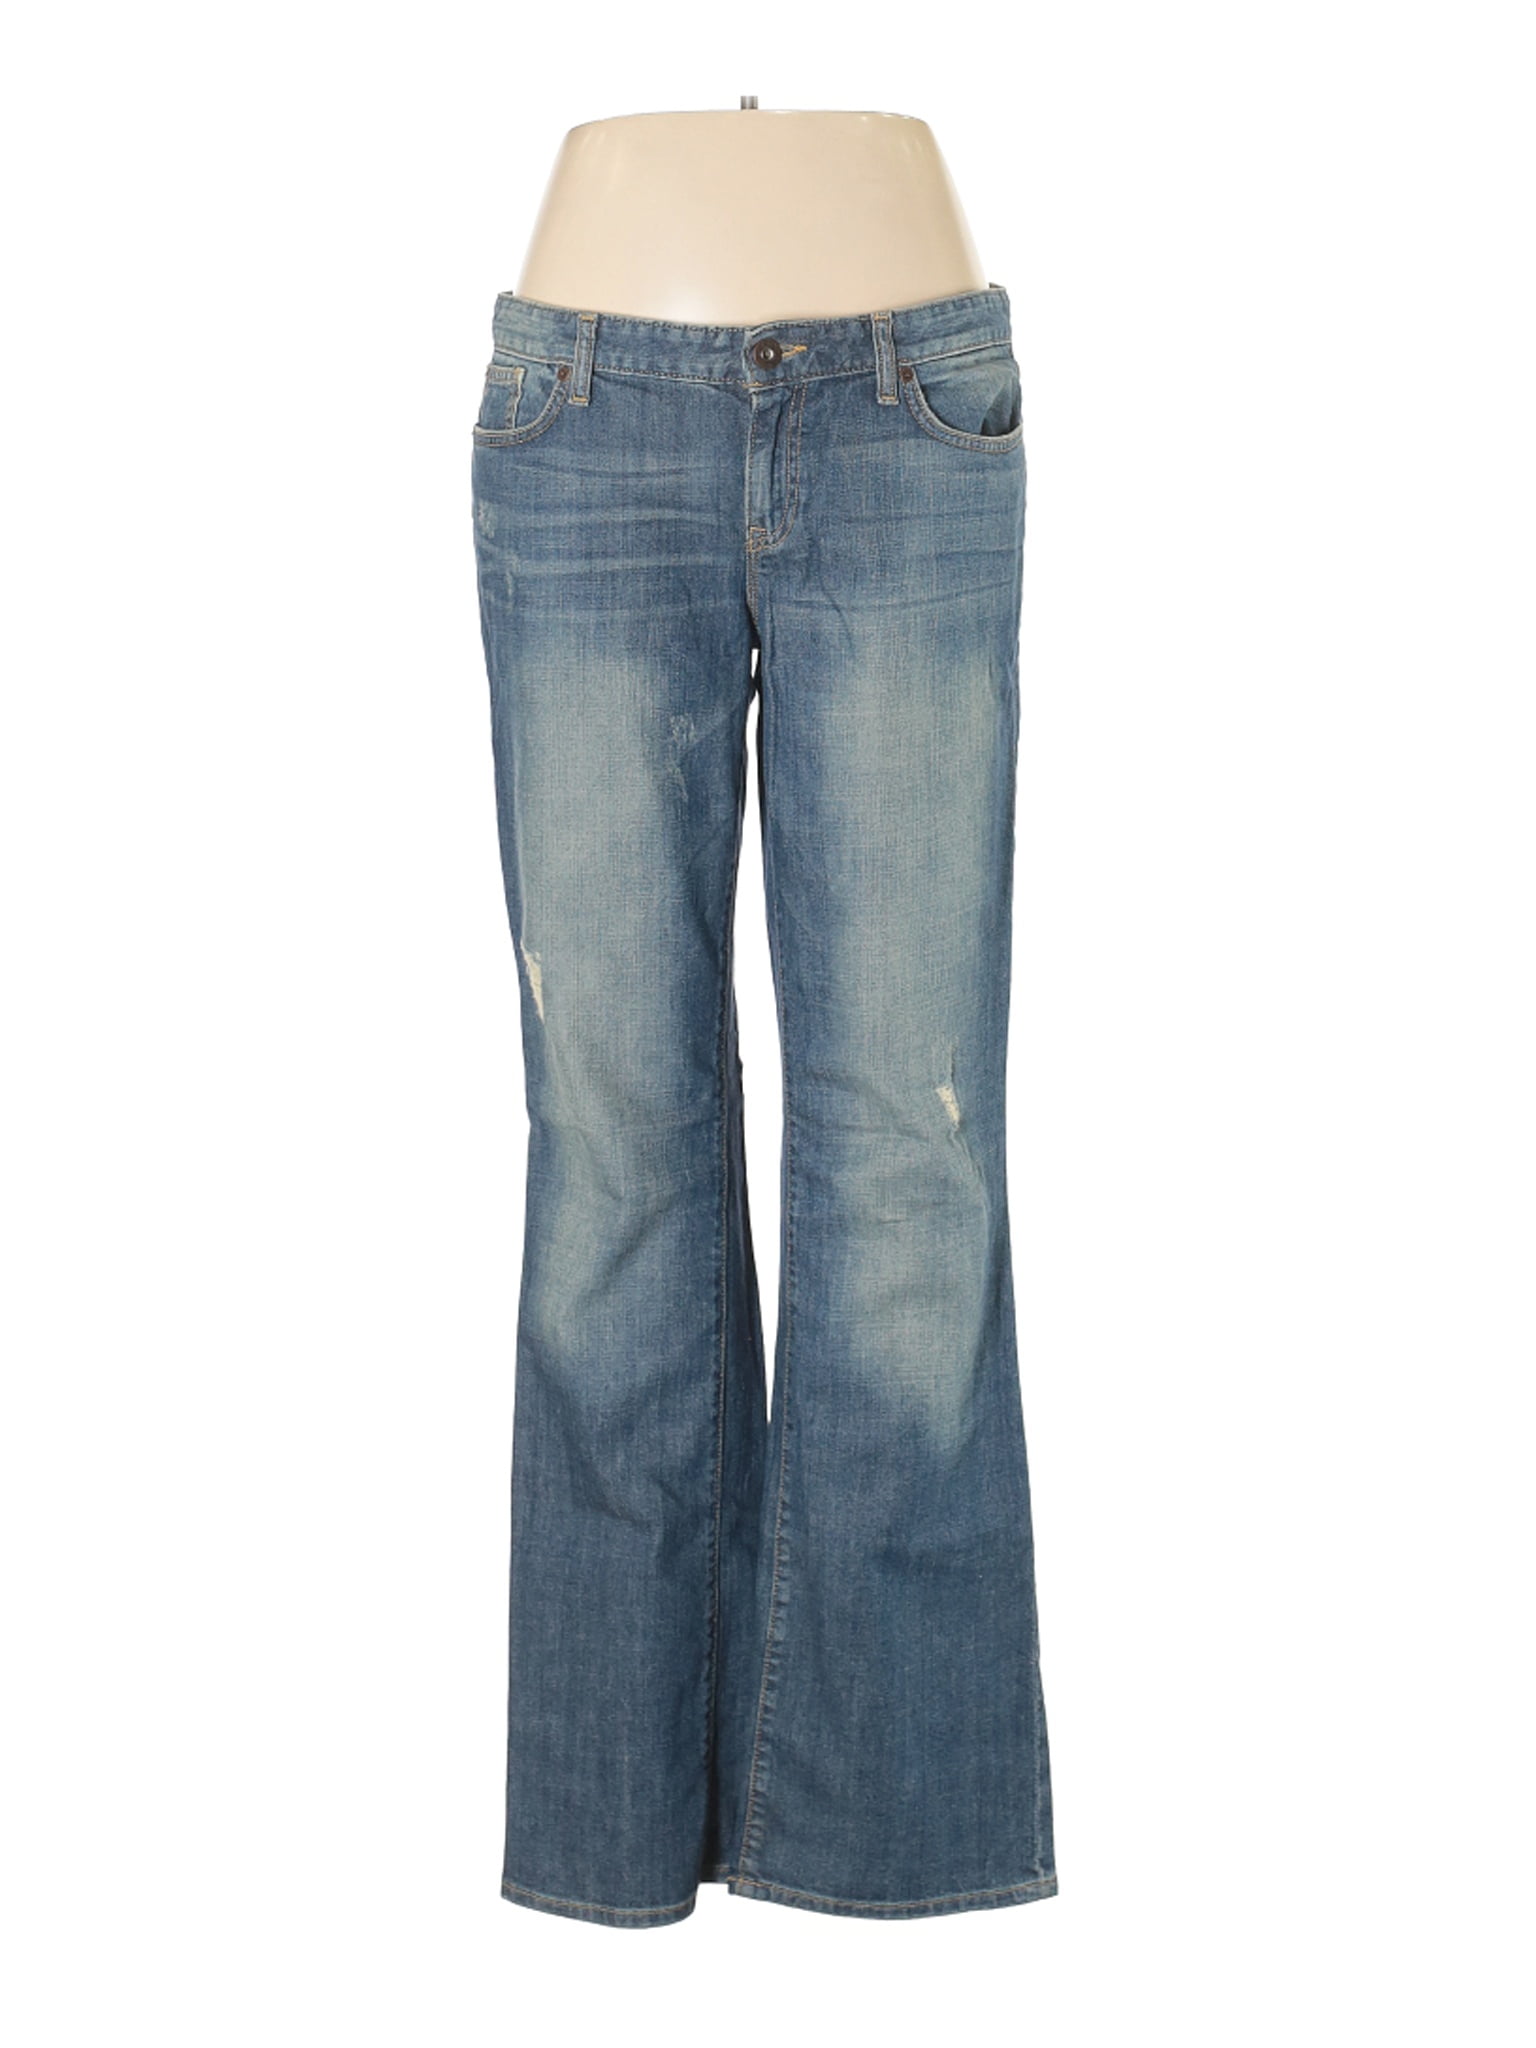 size 14 in gap jeans